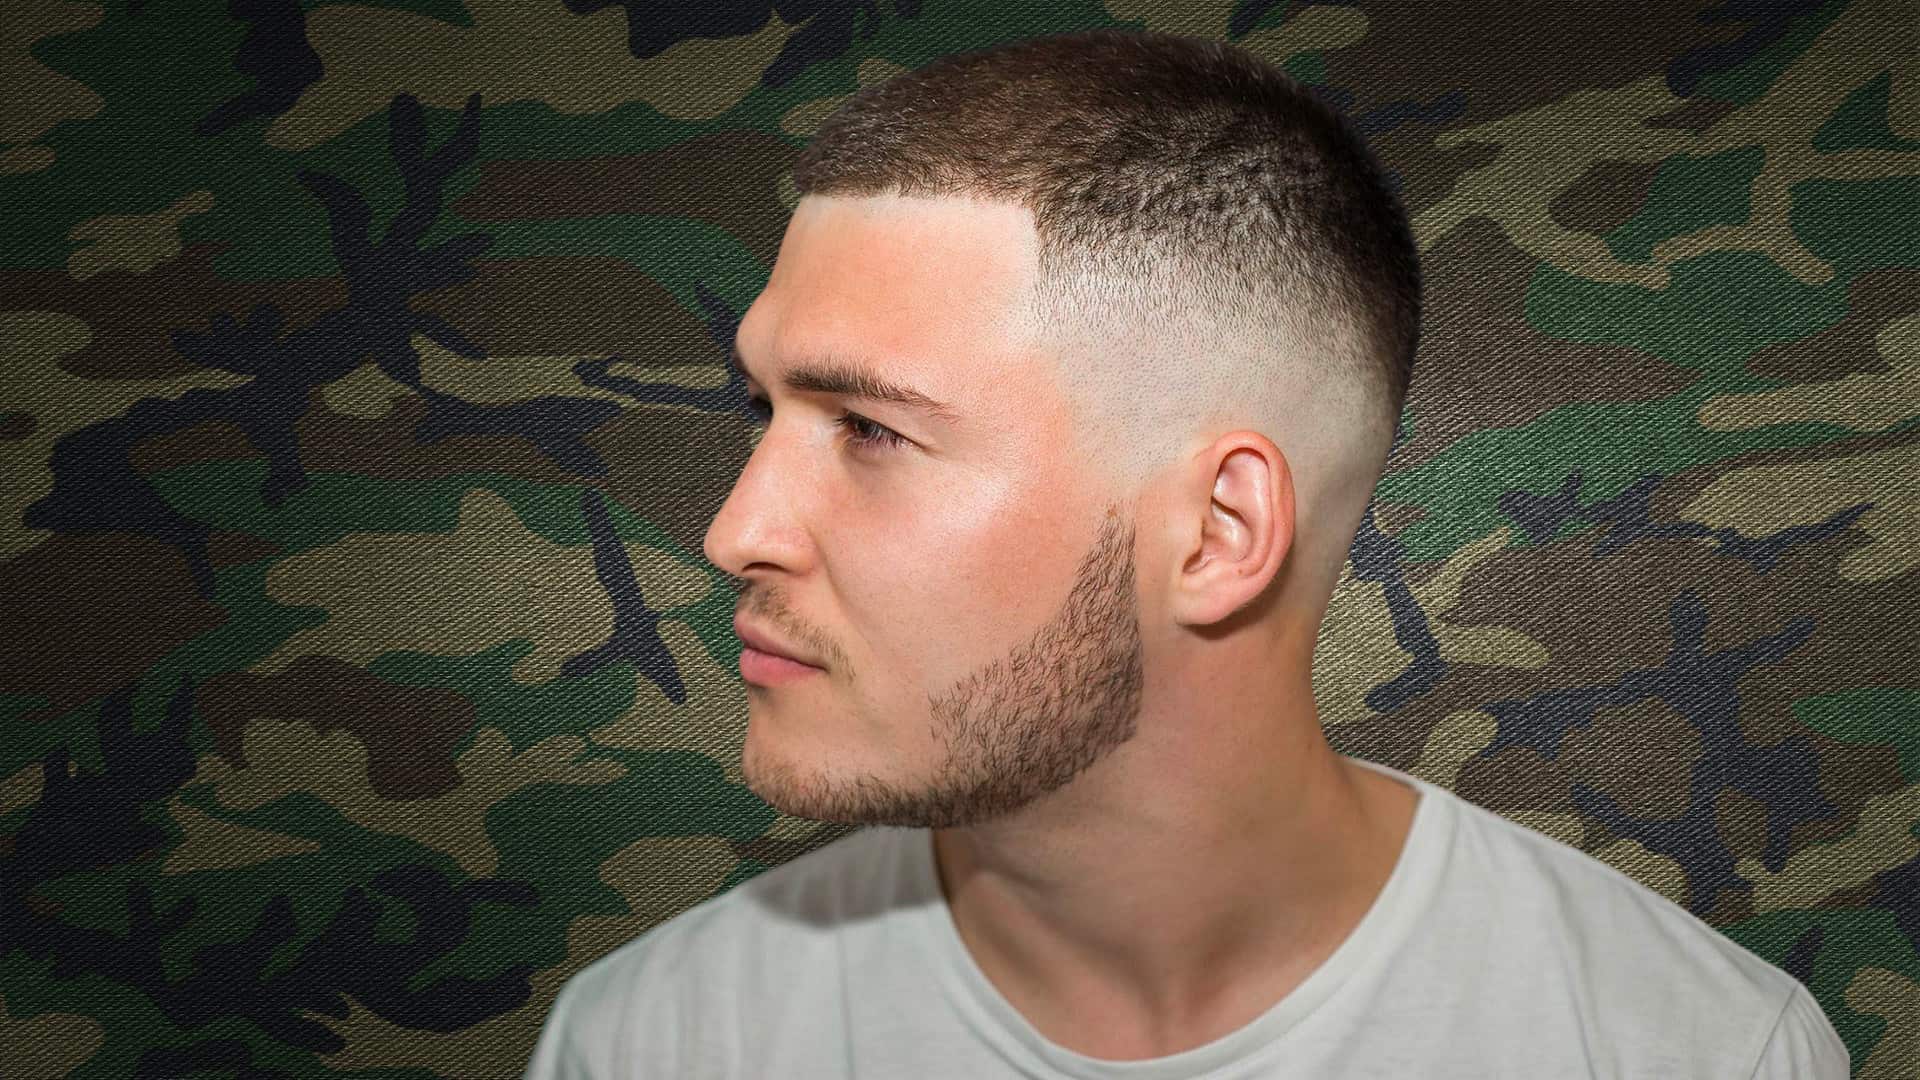 Pin on Military Haircut